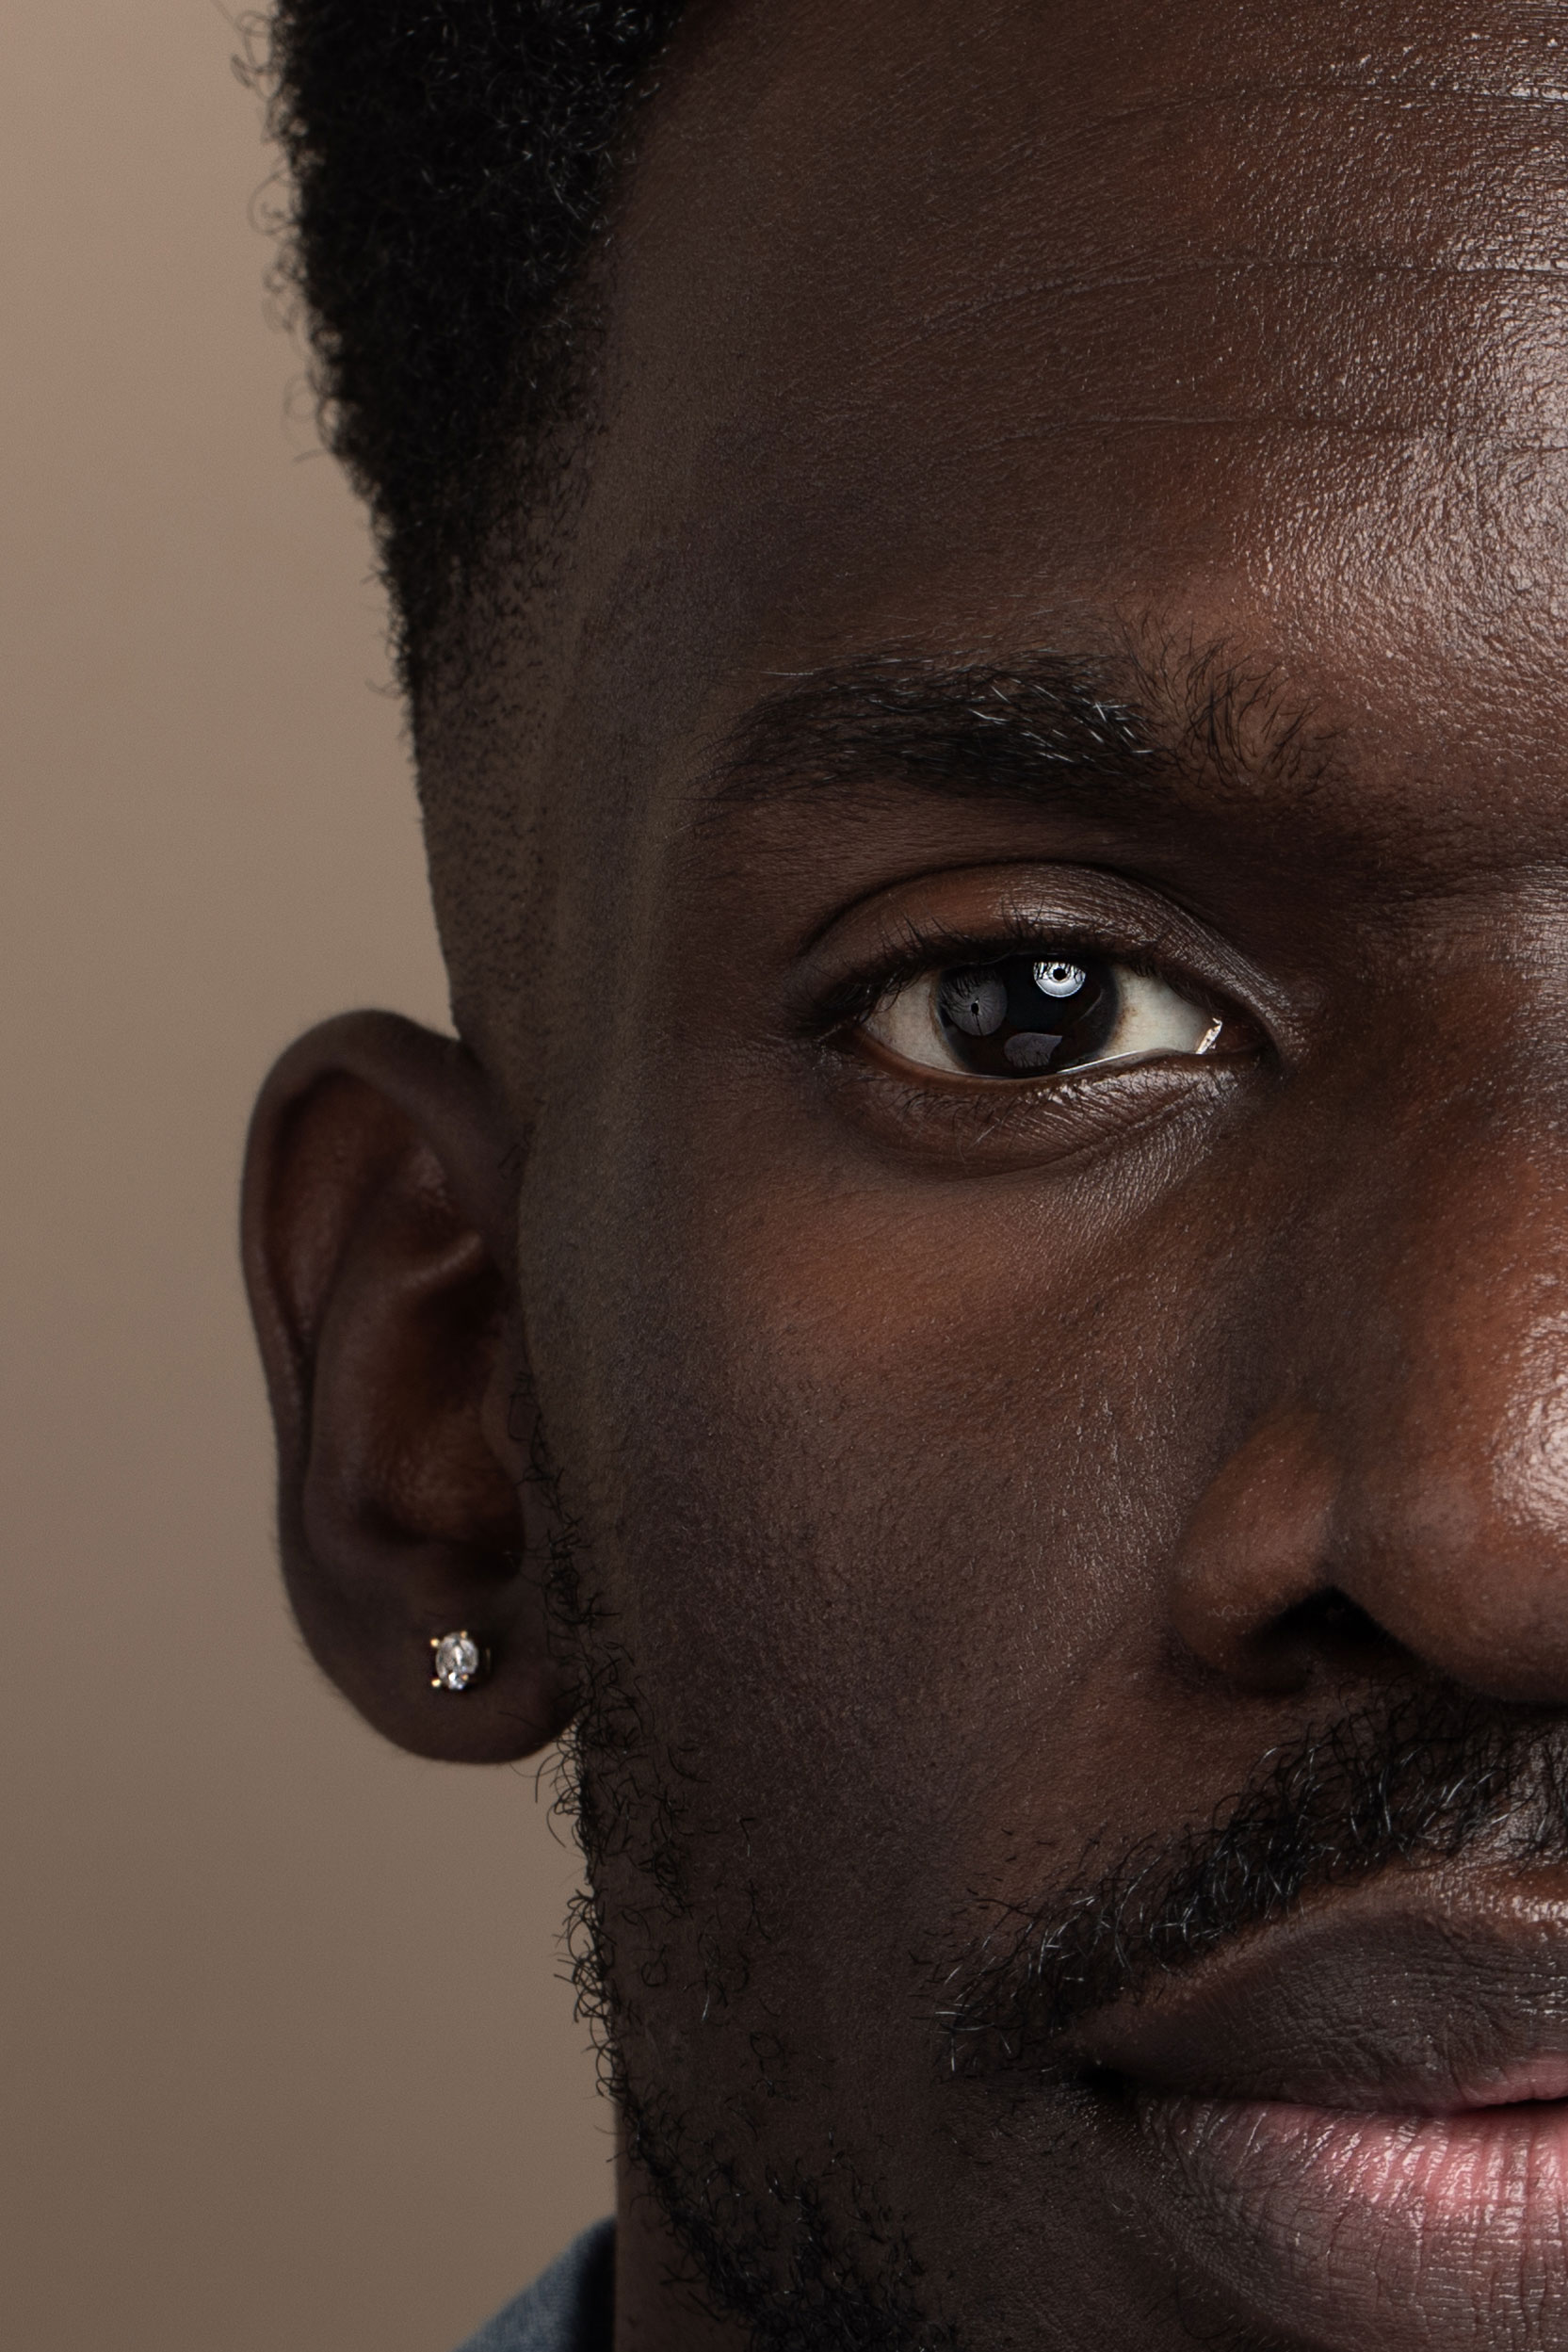 A stunning close up portrait of a Black man.